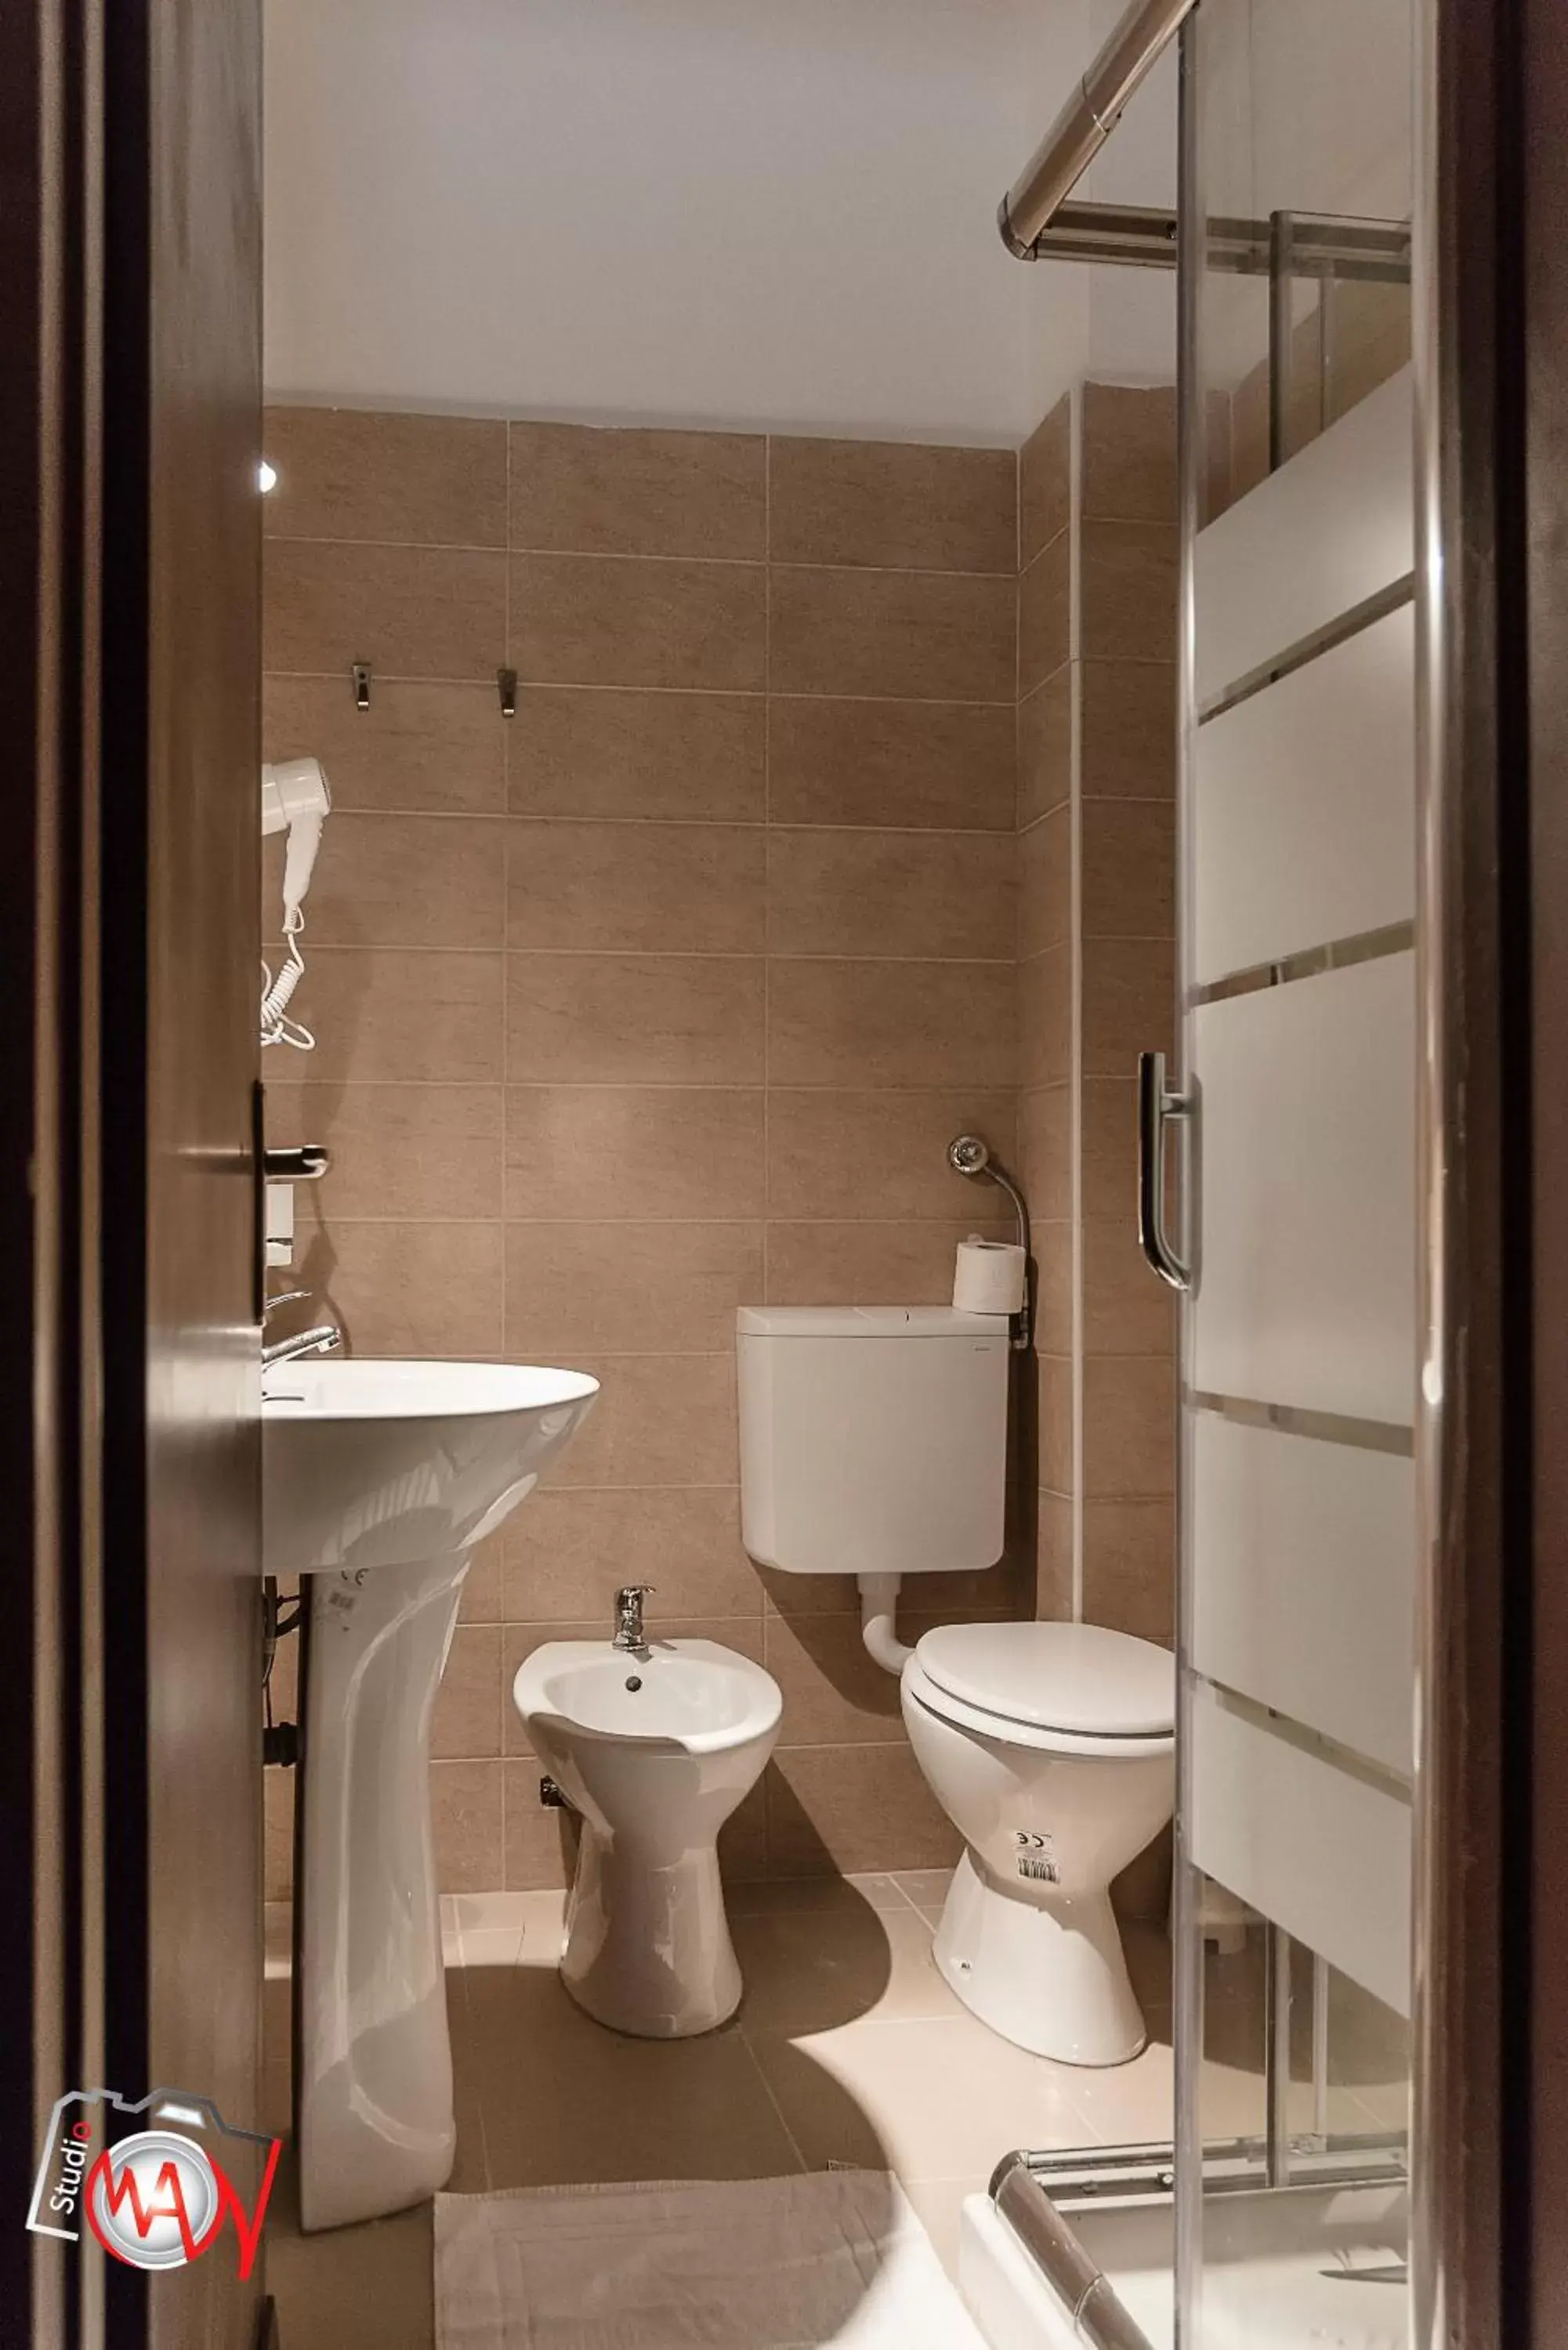 Bathroom in Hotel Moderno